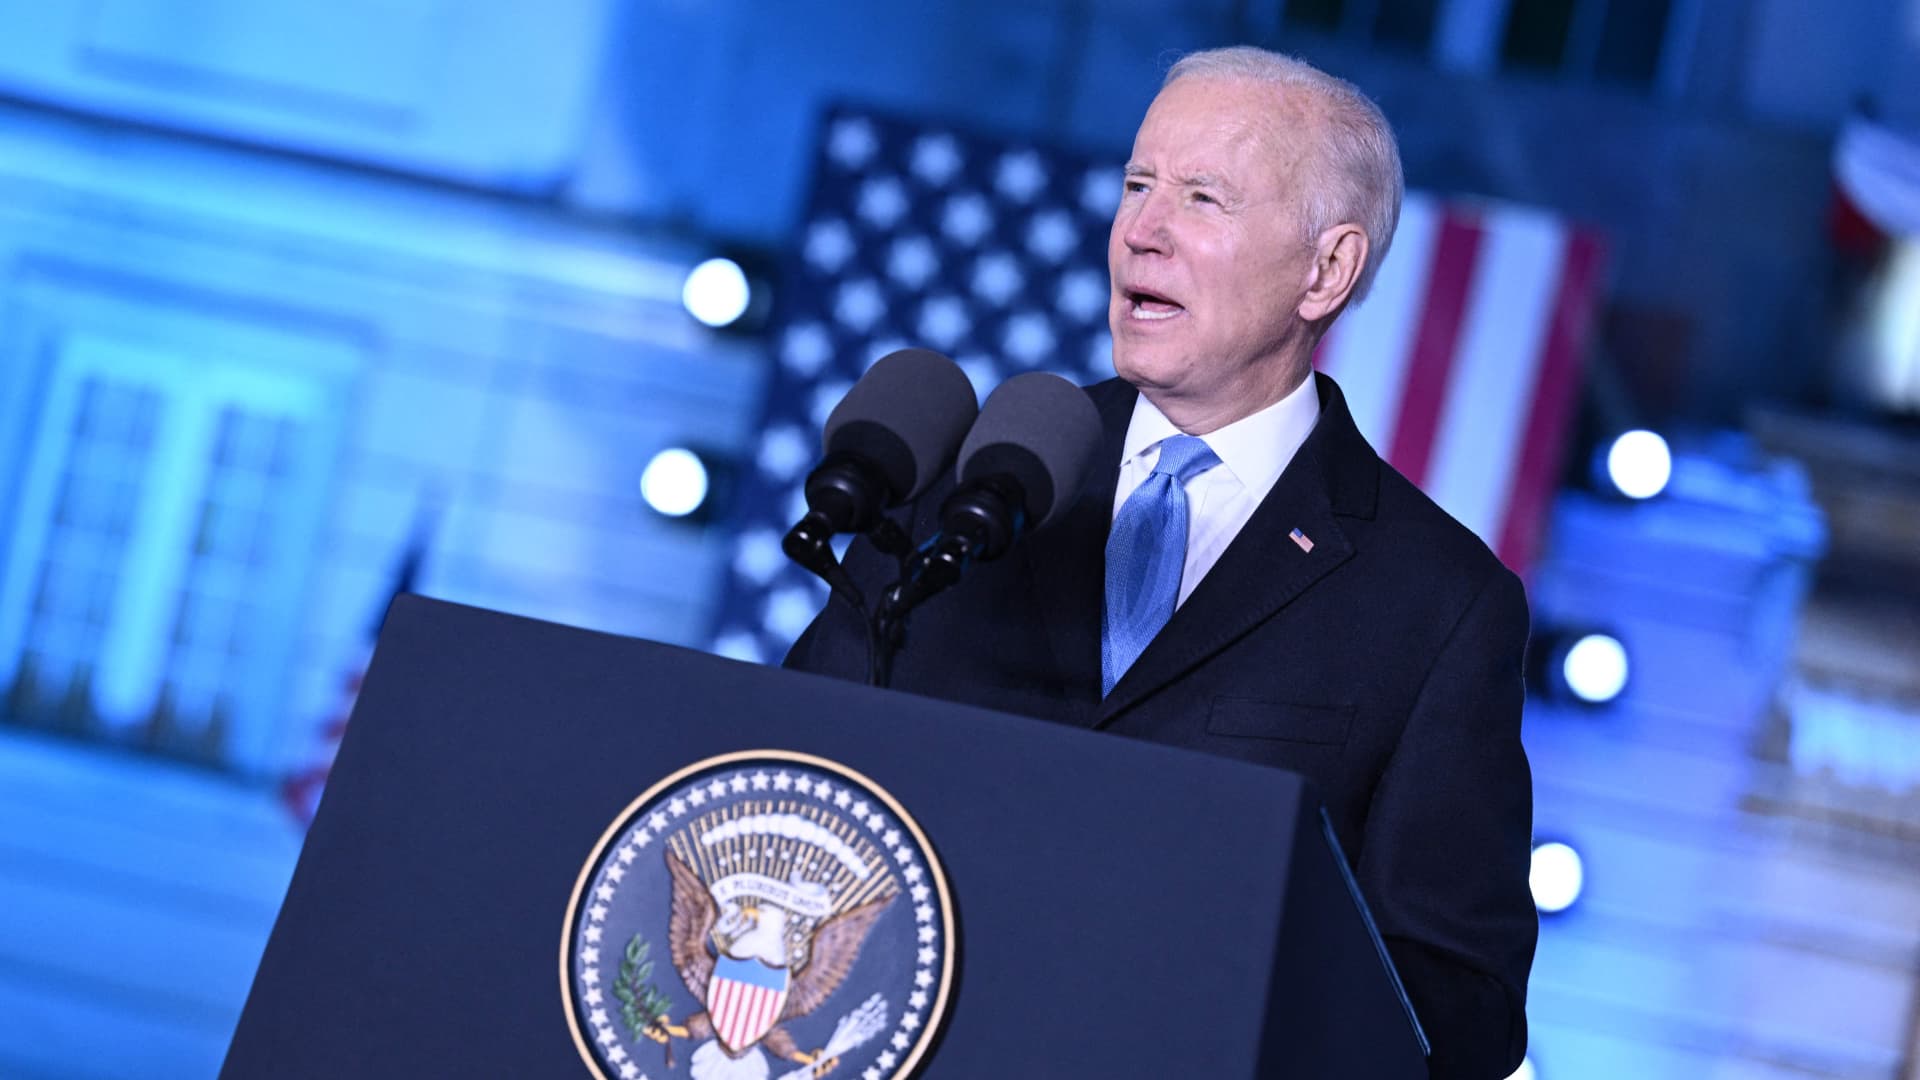 Biden says Putin 'cannot remain in power' in sweeping speech on Russian invasion of Ukraine